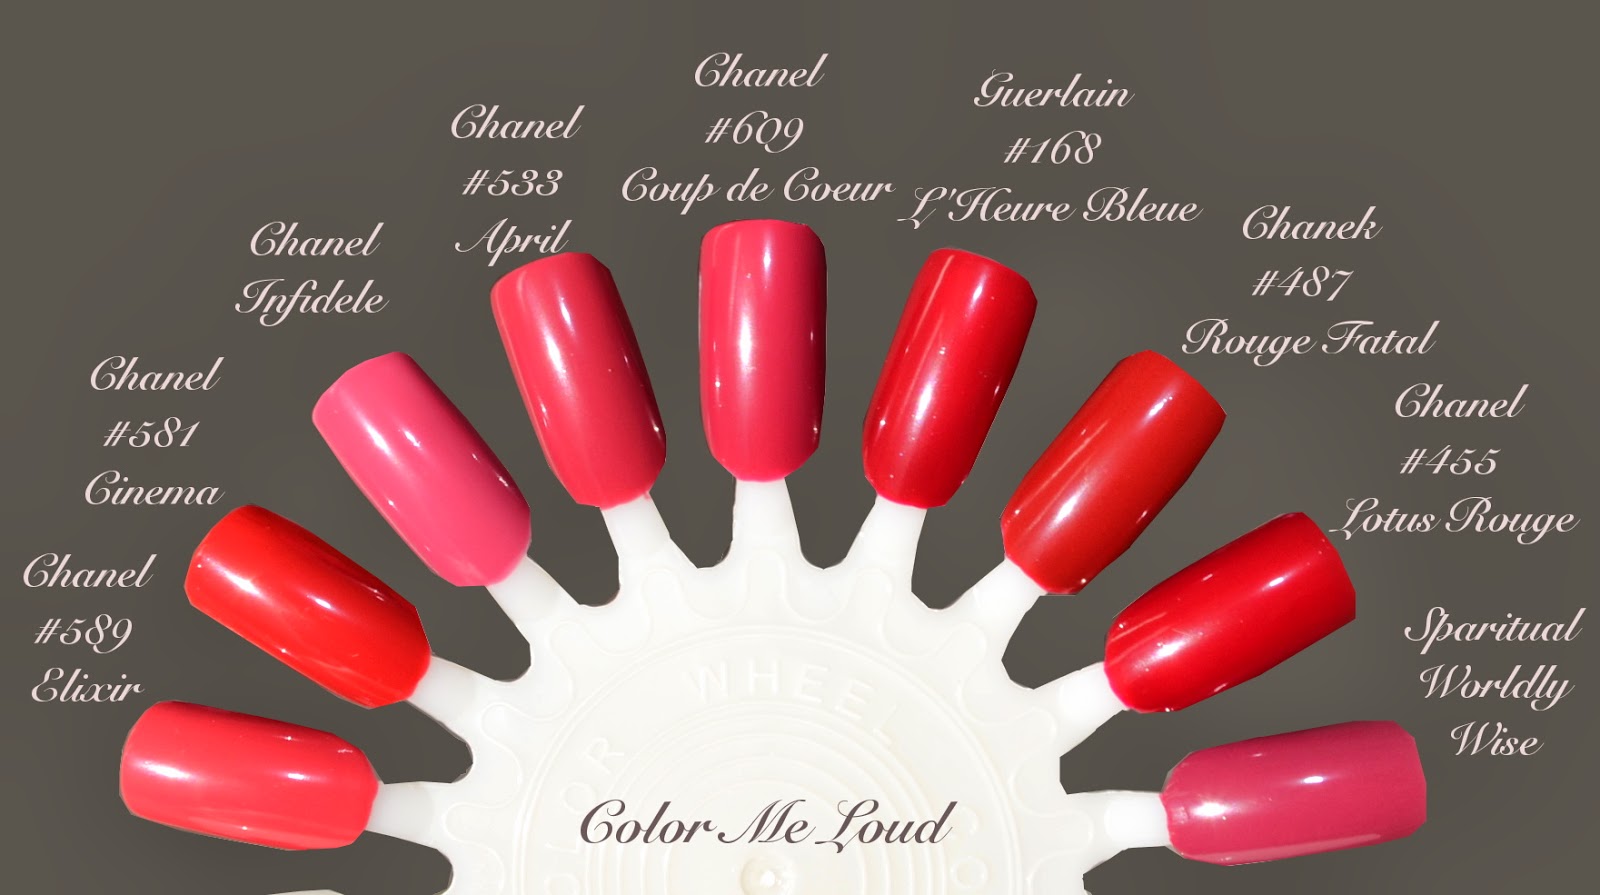 Dior Vernis Nail Colour #306 Gris Trianon (Beige) w Cap 10 ml Free S&H